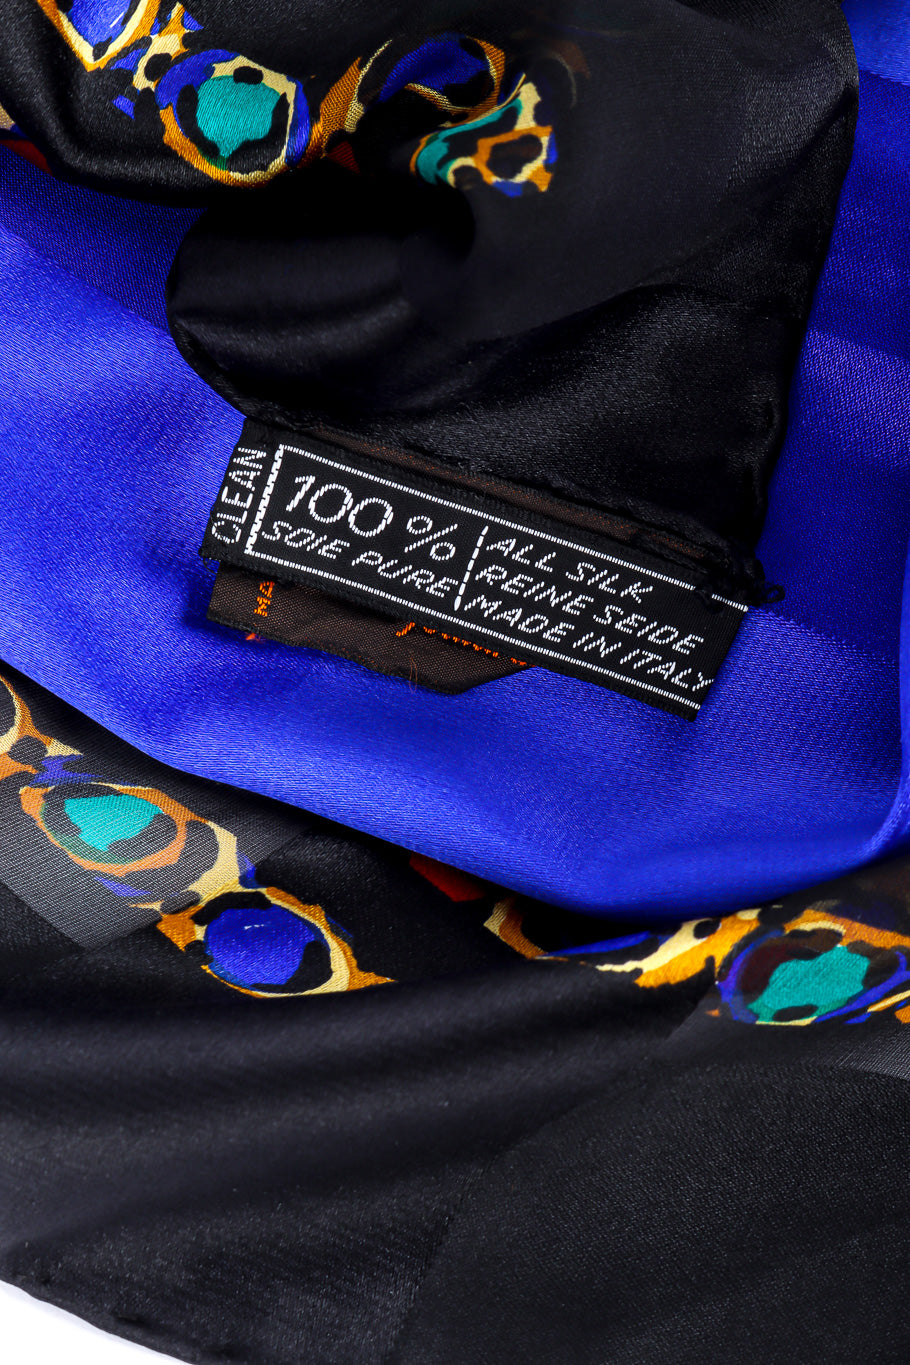 Yves Saint Laurent Jewel Scarf Fabric Details @recessla